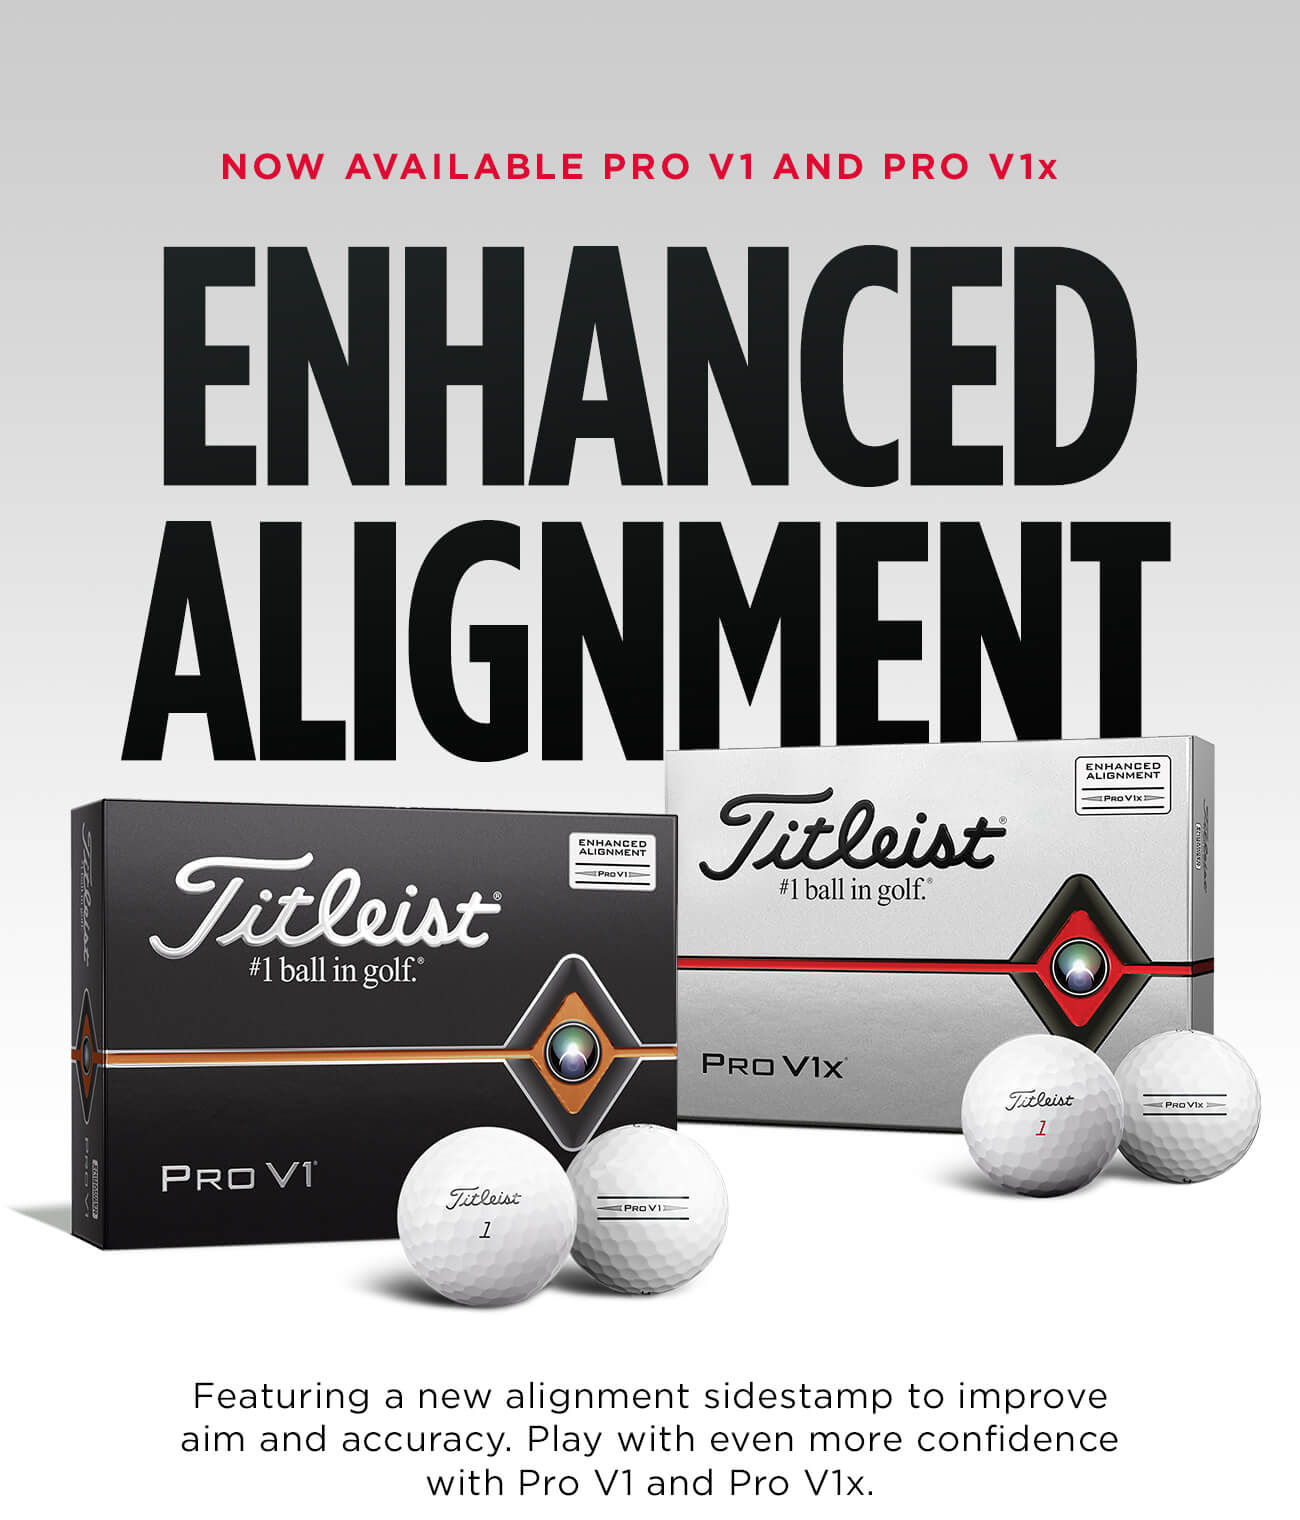 Shop Pro V1 and Pro V1x with Enhanced Alignment Sidestamp